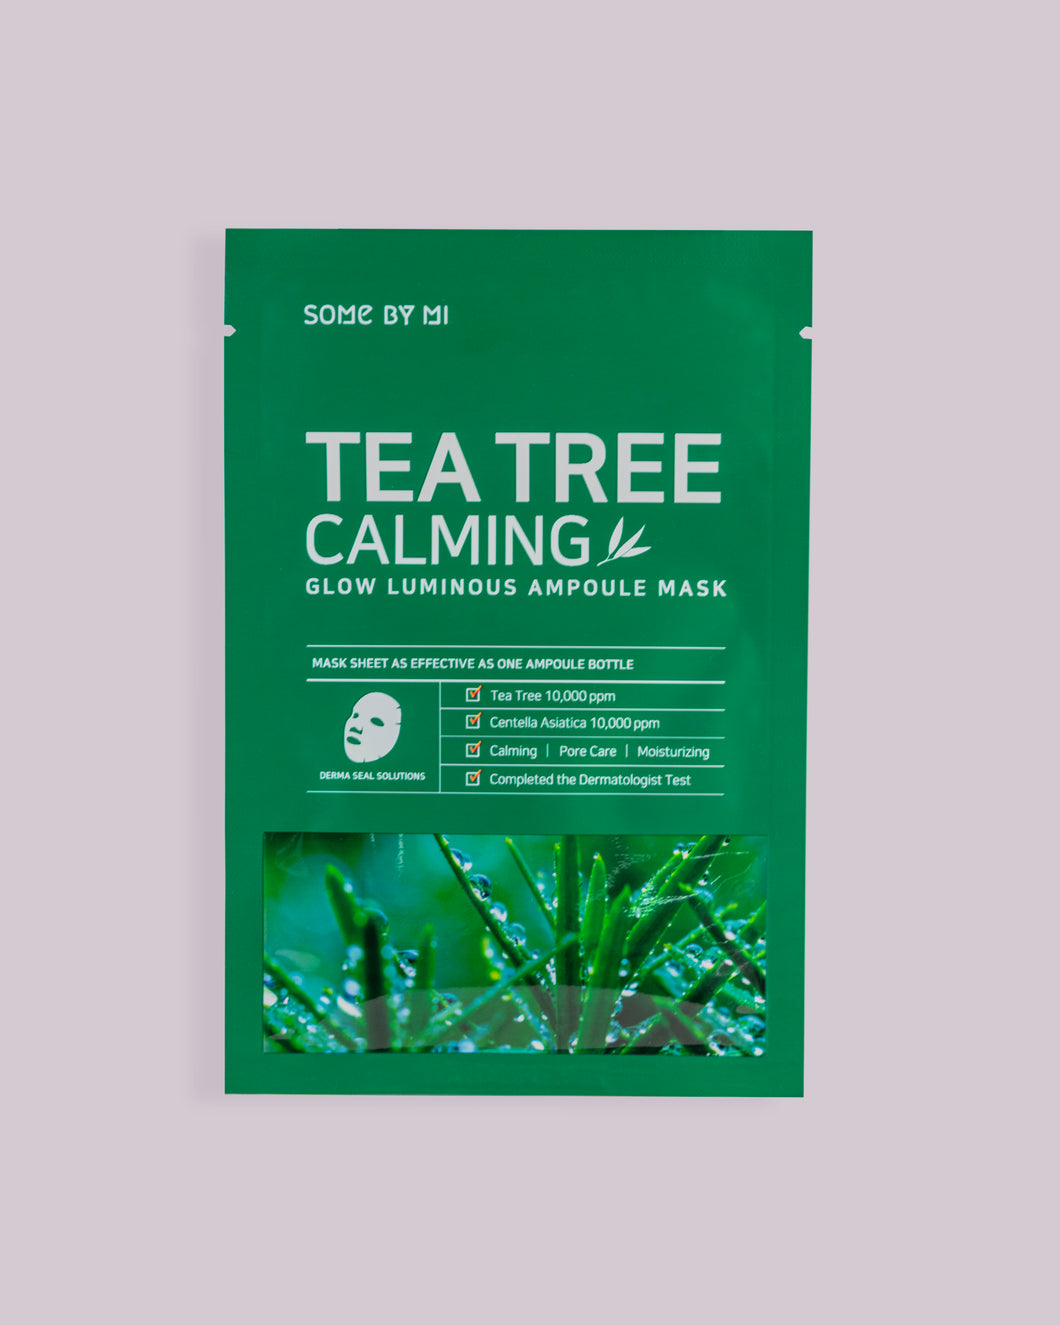 SOME BY ME - Tea tree Calming